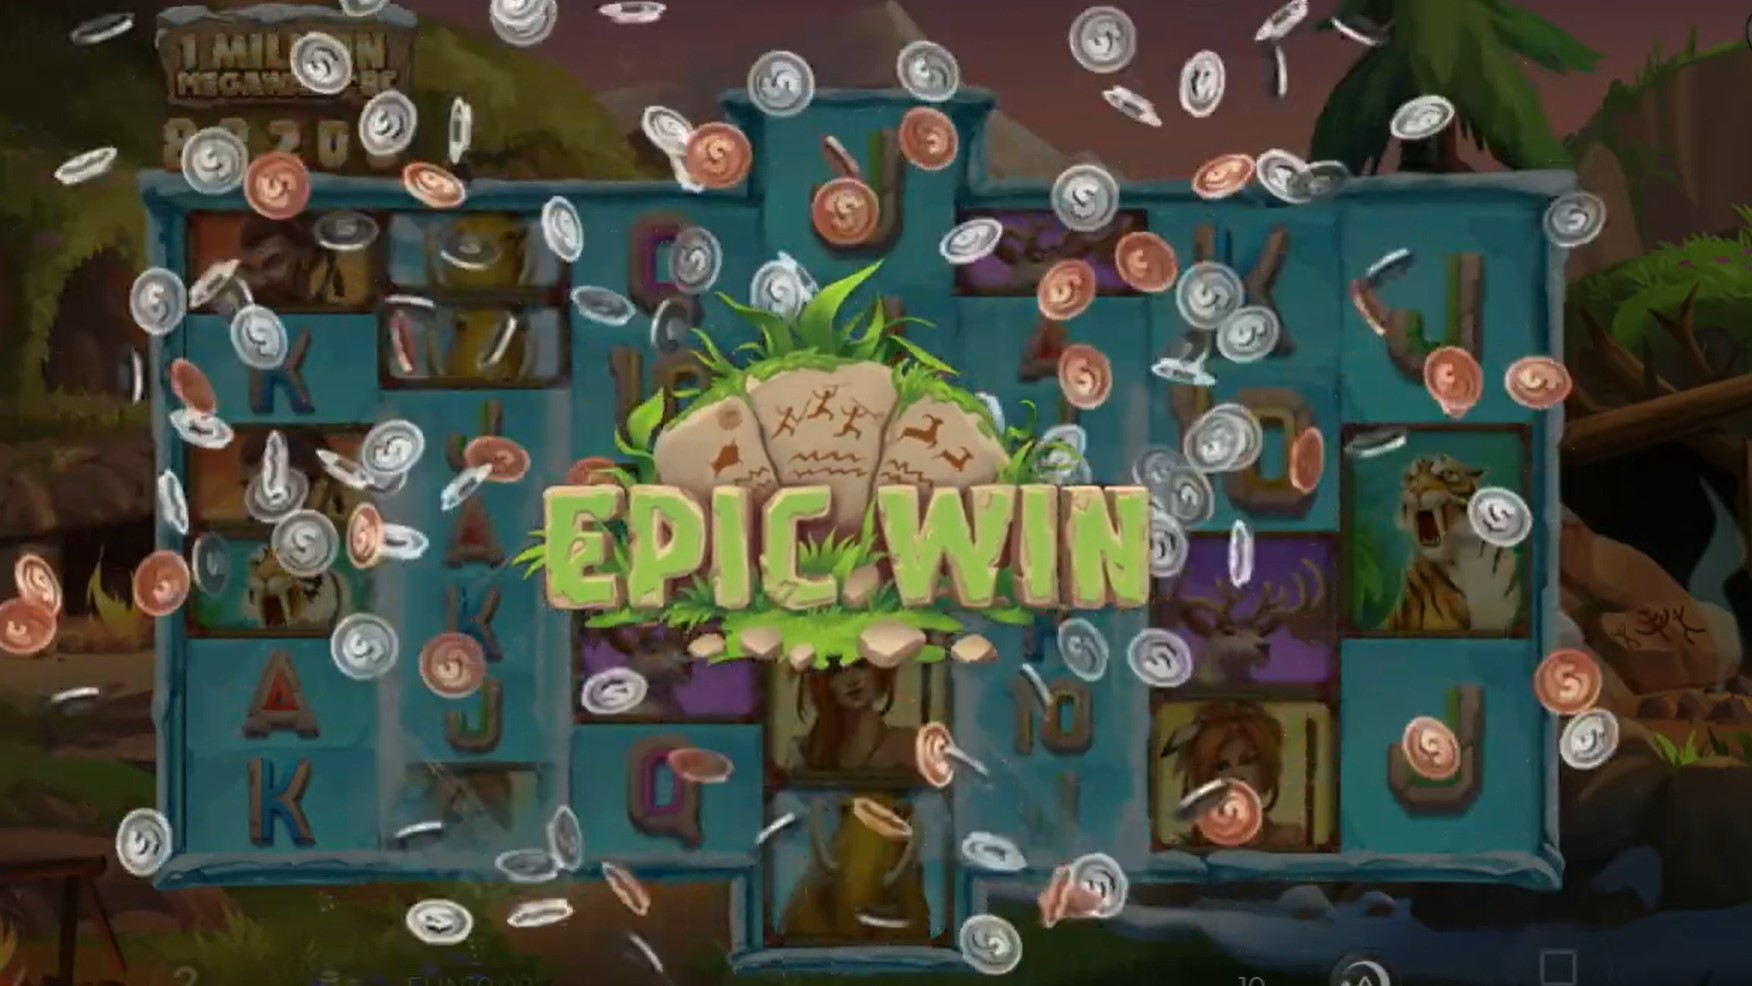 1 Million Megaways BC Epic win Iron Dog Studio